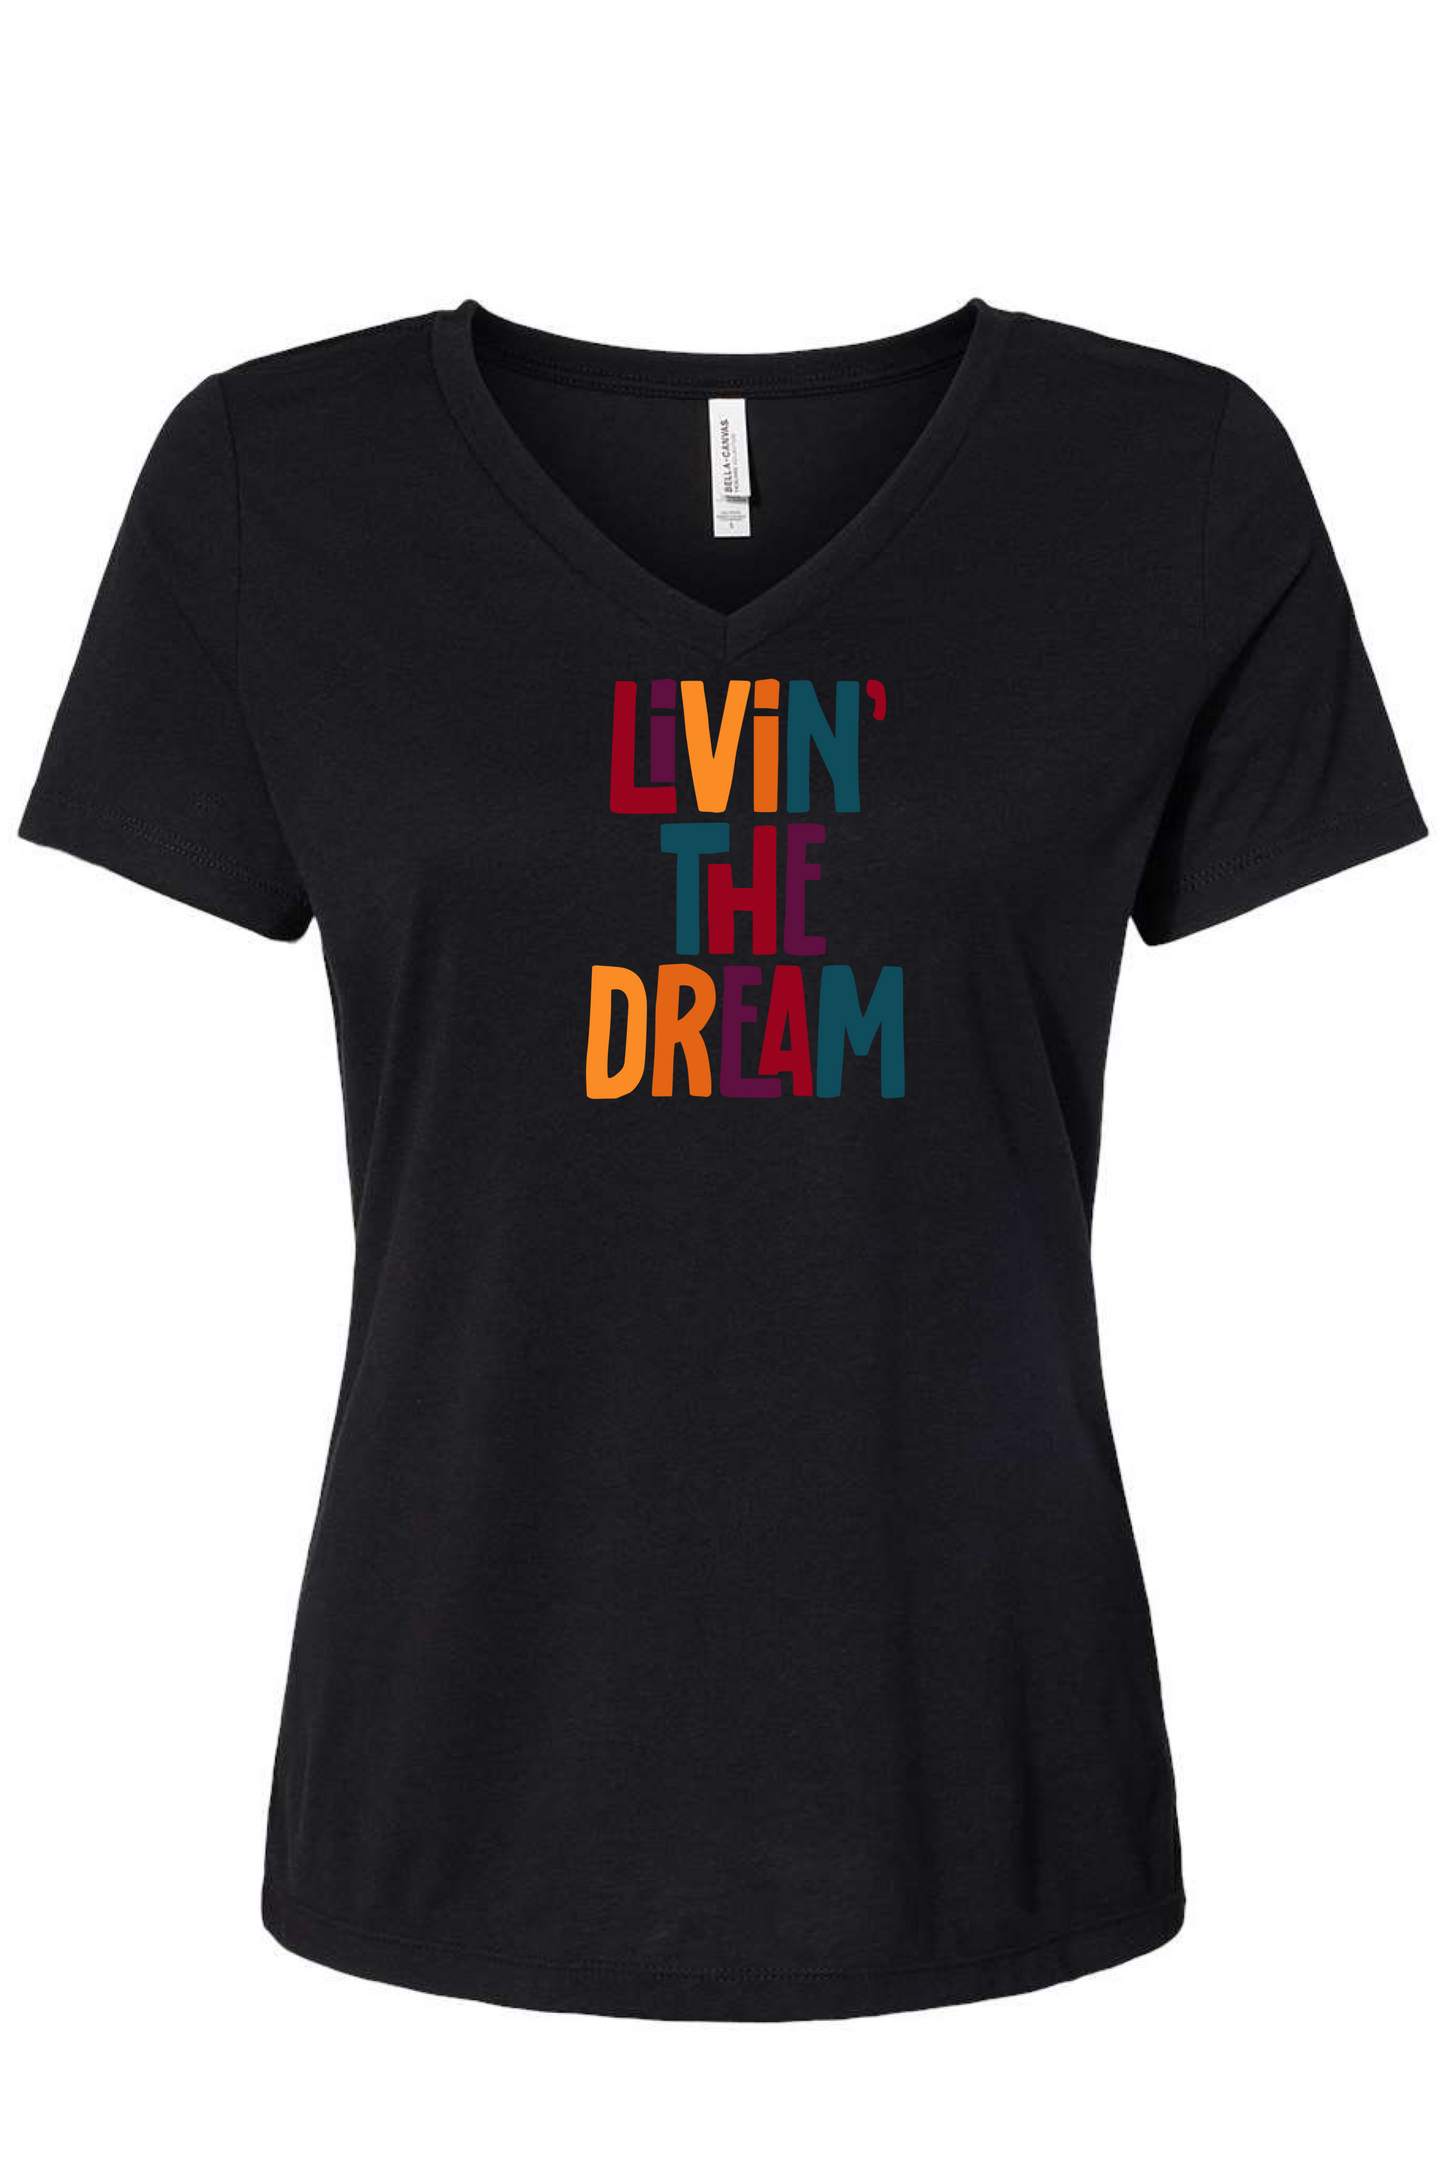 Livin" The Dream Tri- Blend V-Neck T-Shirt